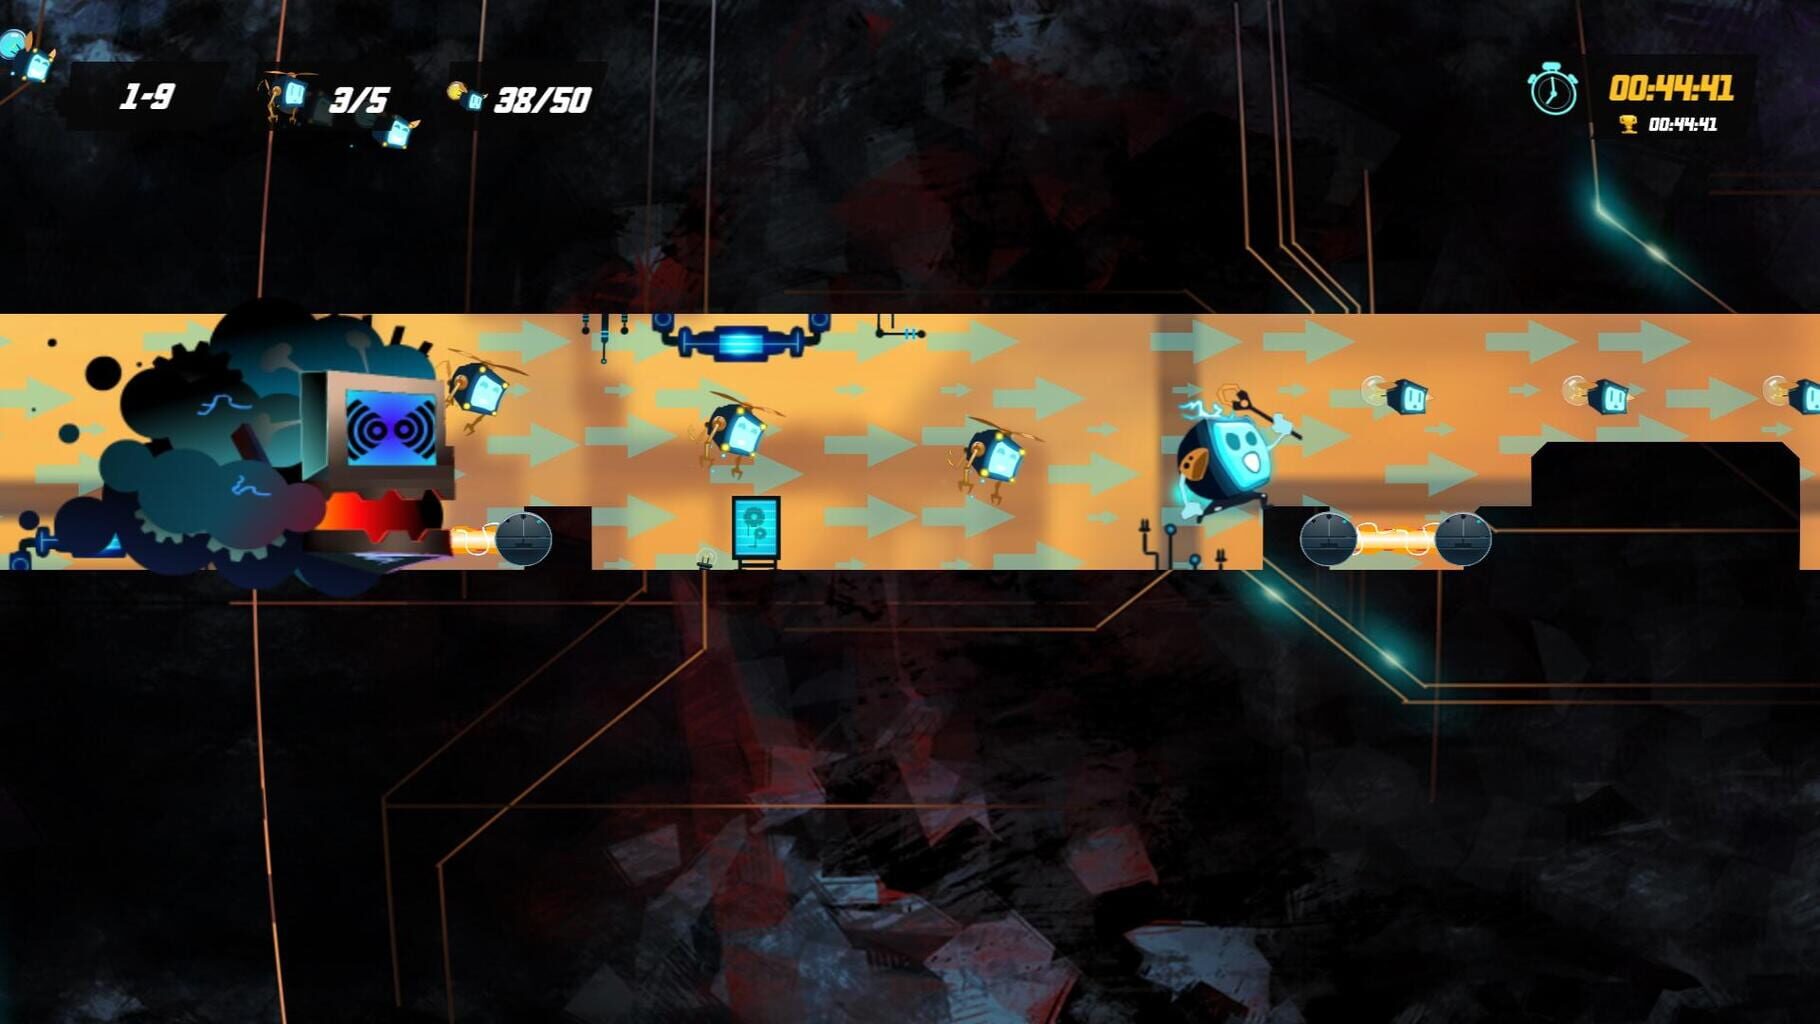 Mechanic Escape screenshots